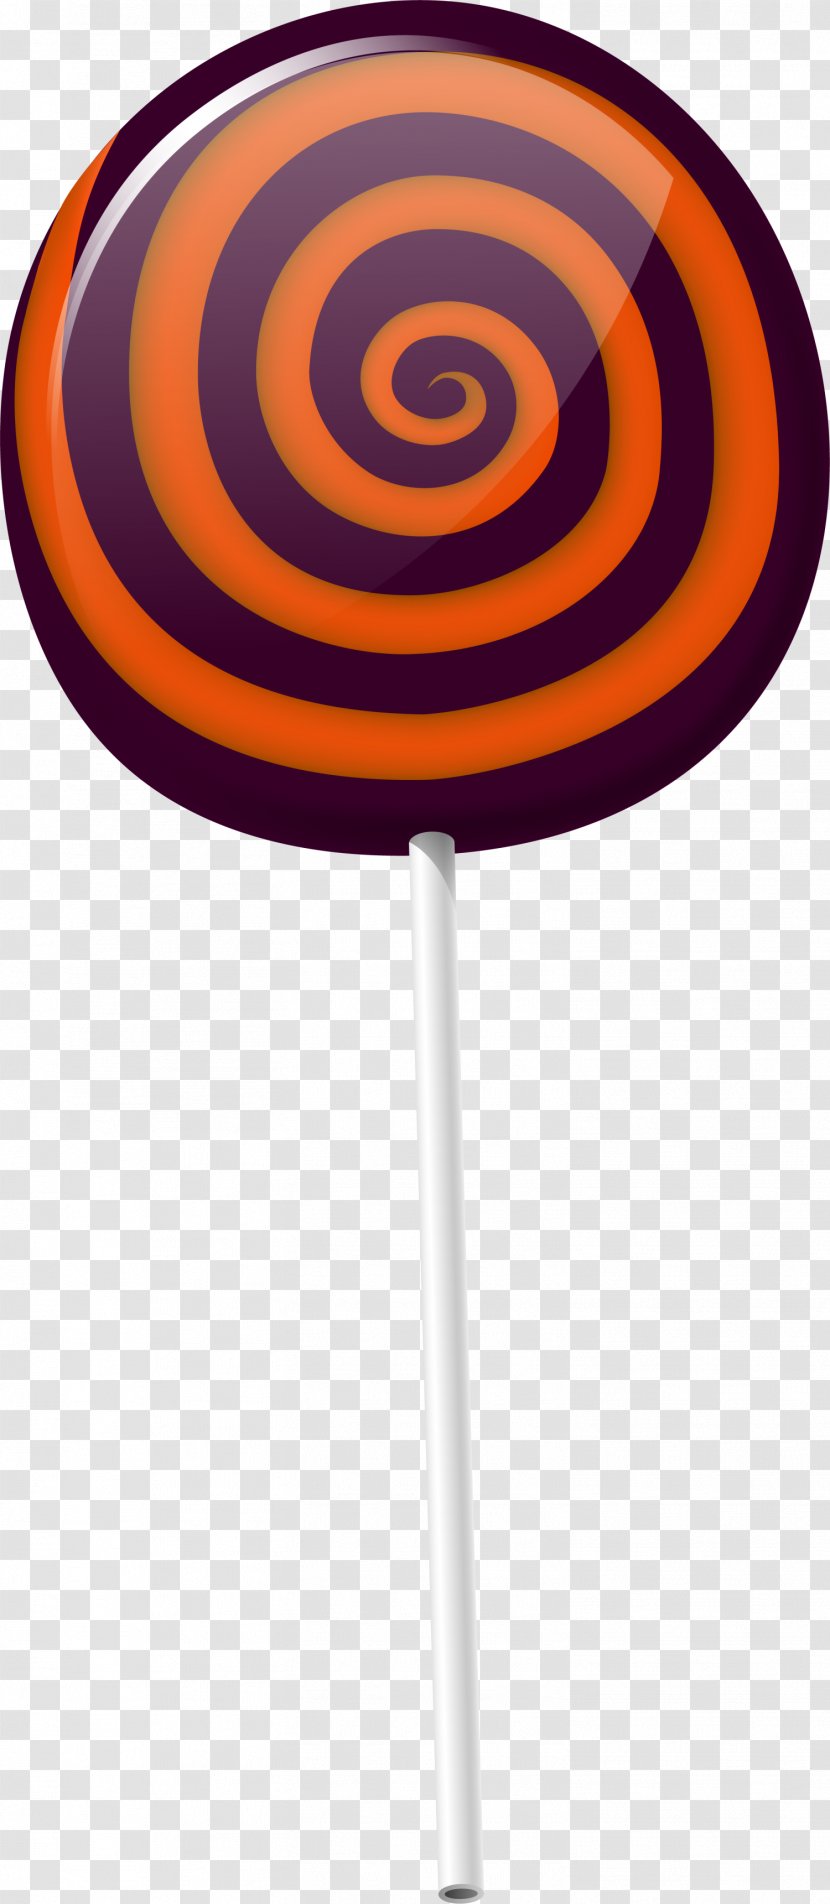 Orange Juice Lollipop Caramel - Dessert - Swirl Candy Transparent PNG